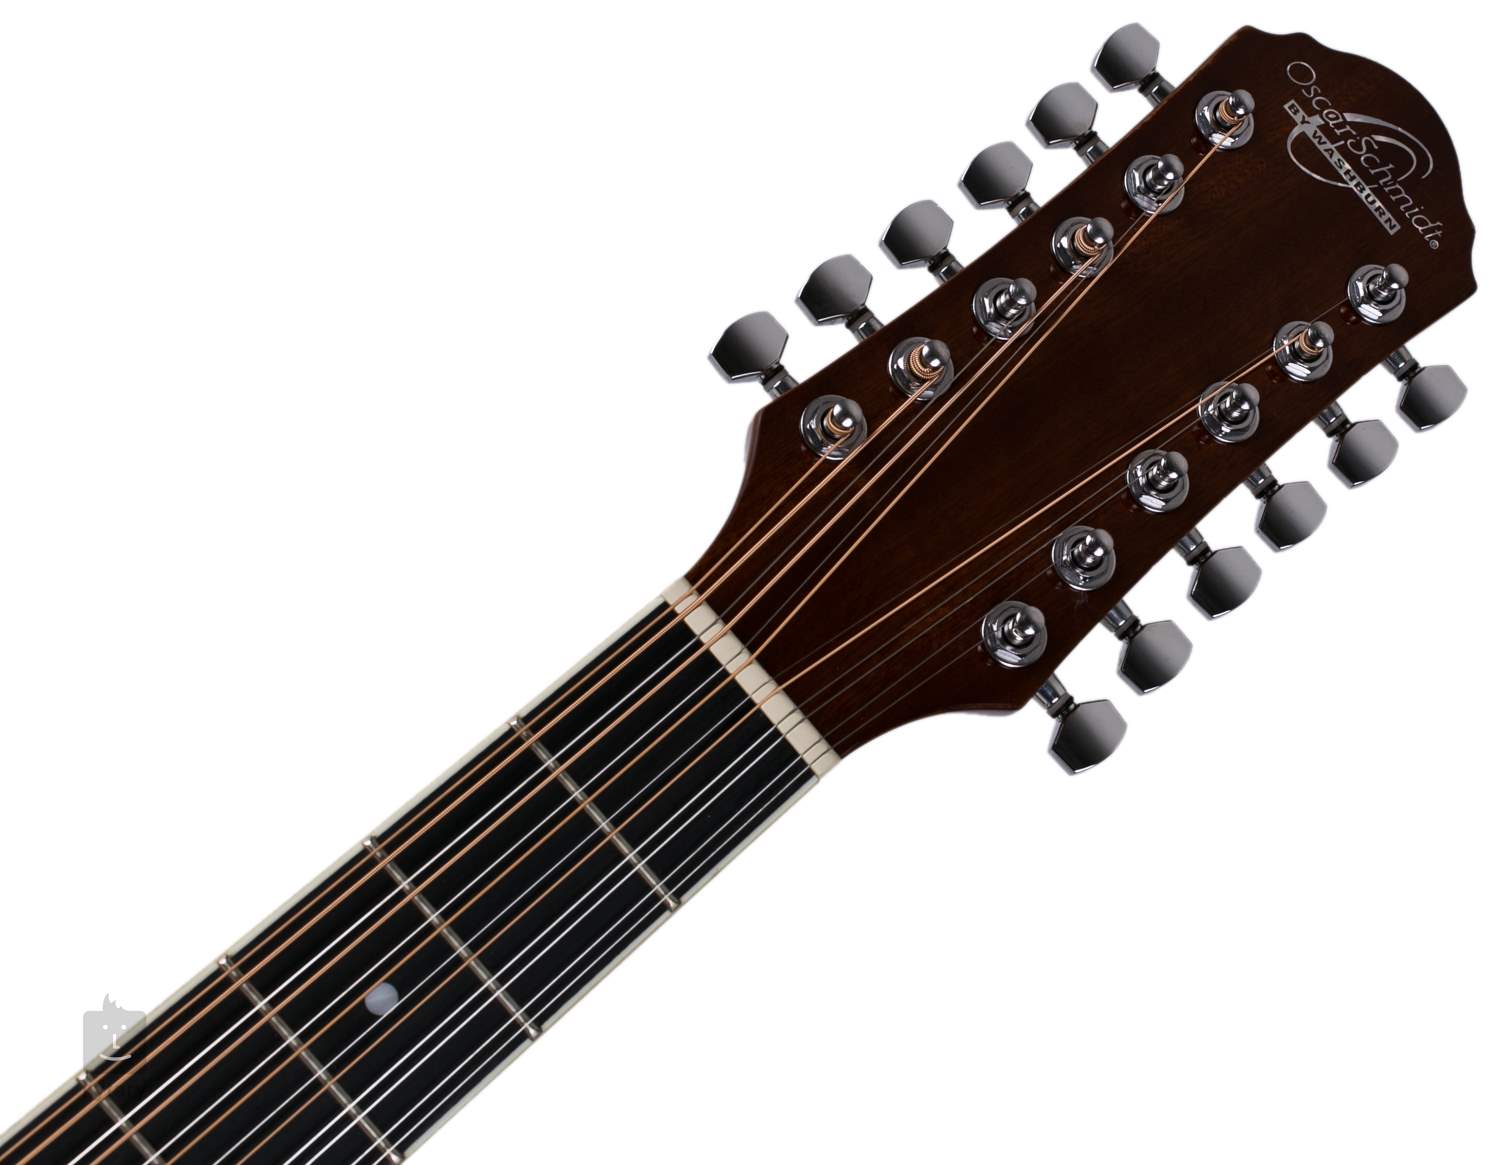 Oscar Schmidt OD312CE-A-U 12-String Acoustic Electric Guitar Natural